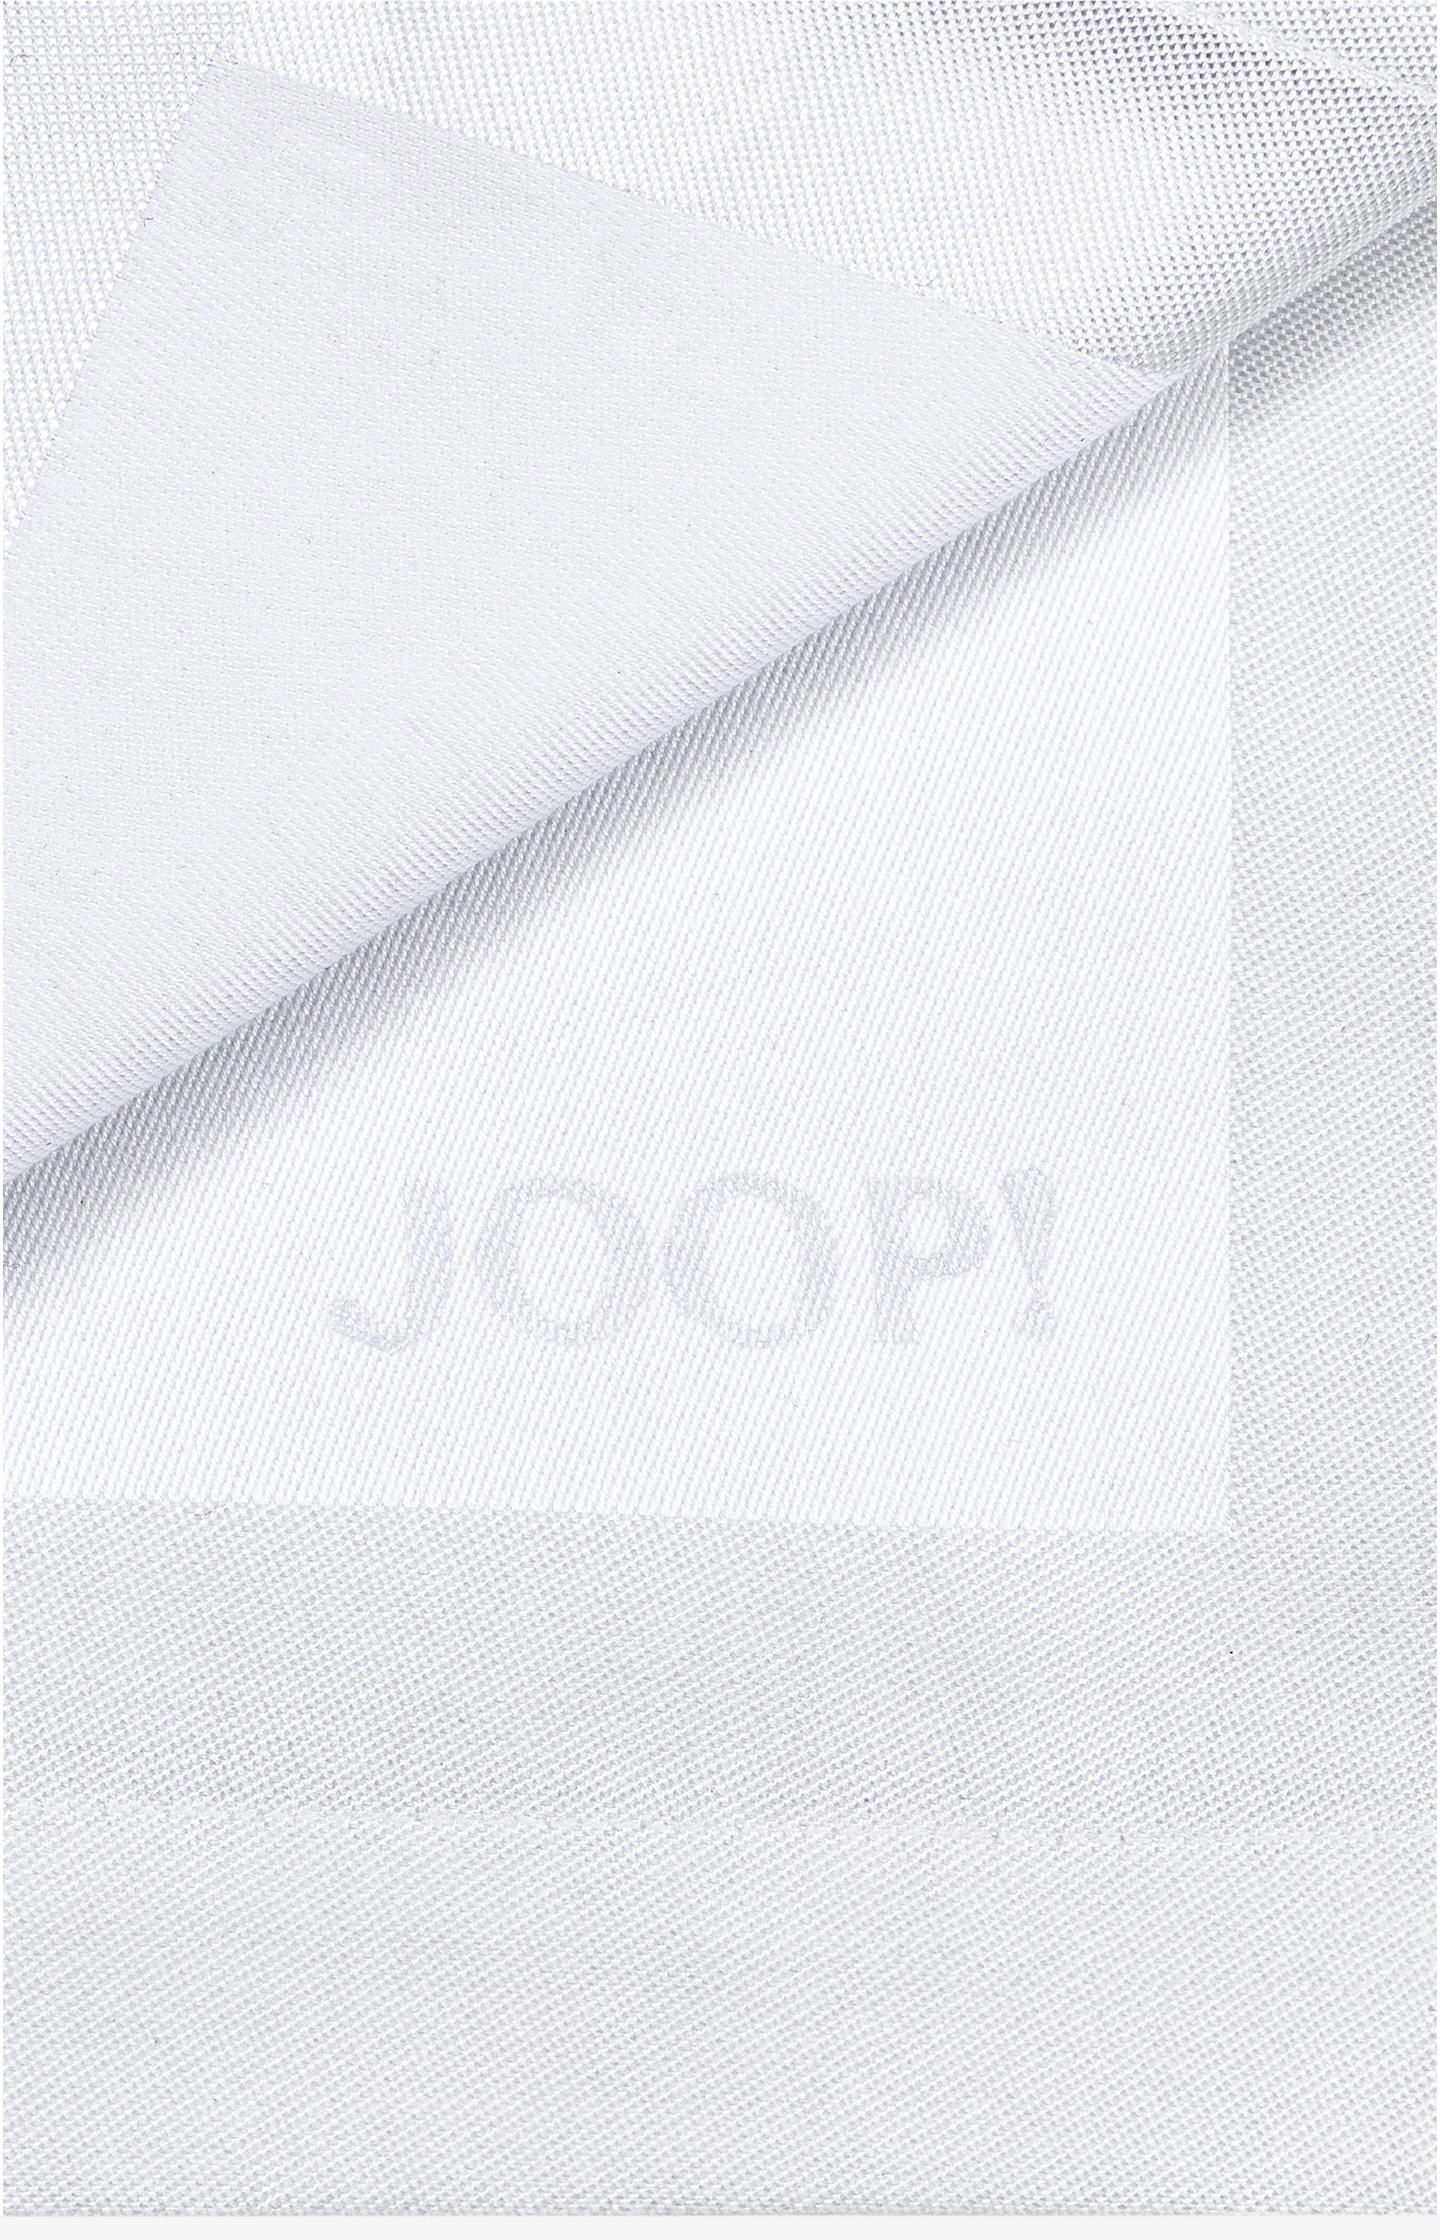 Platzsets JOOP! Signature Weiß, Online-Shop im x 36 cm 48 Set JOOP! - 2er - in